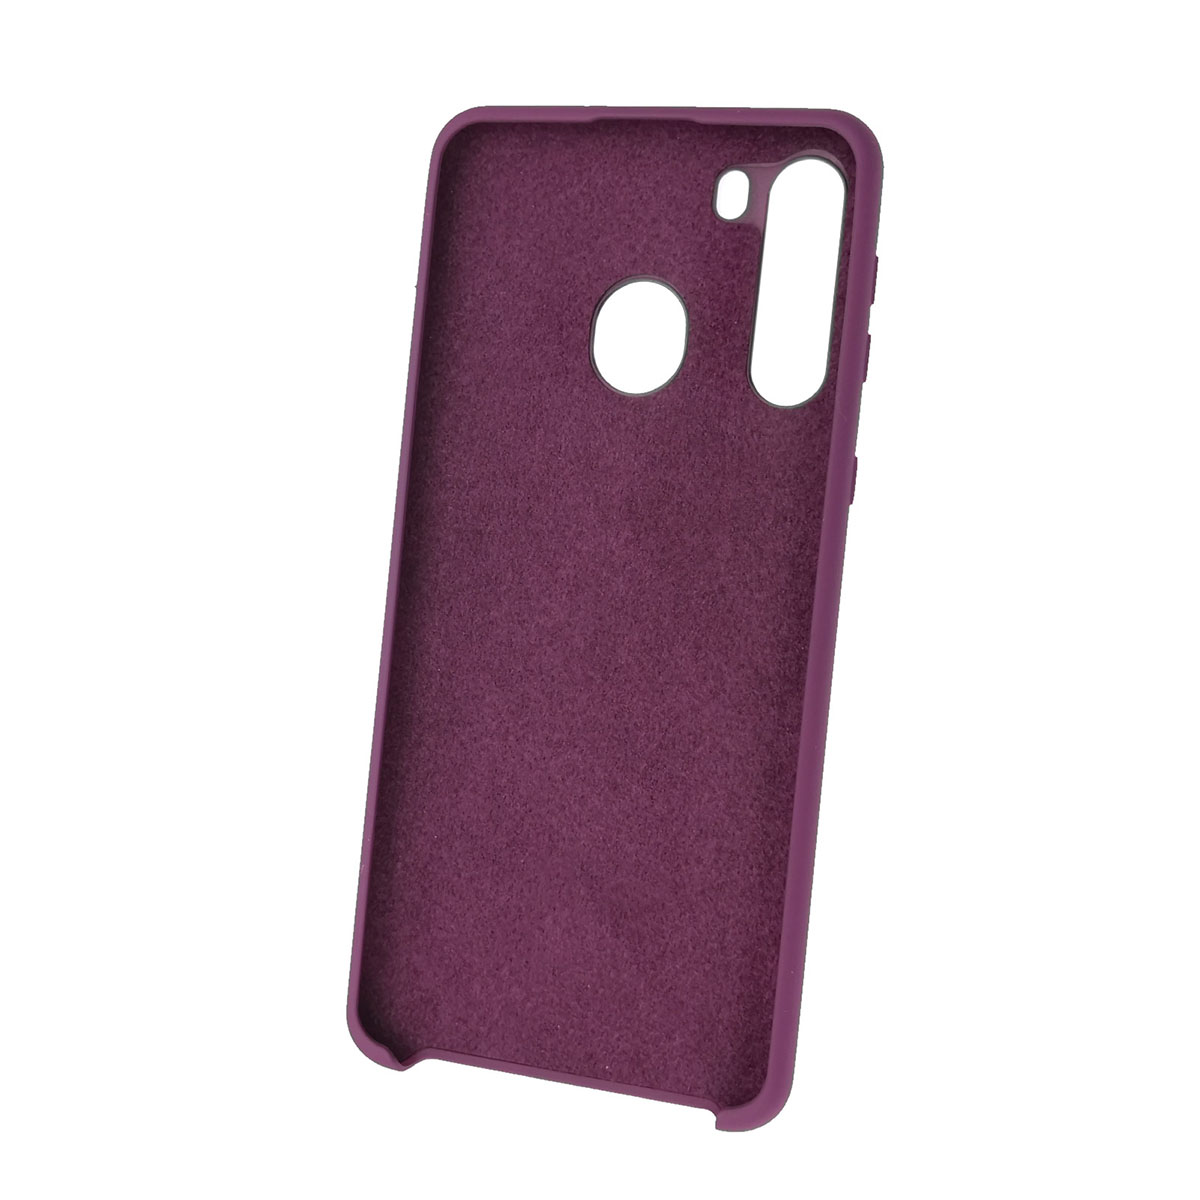 Чехол накладка Silicon Cover для SAMSUNG Galaxy A21 (SM-A215), силикон, бархат, цвет баклажан.